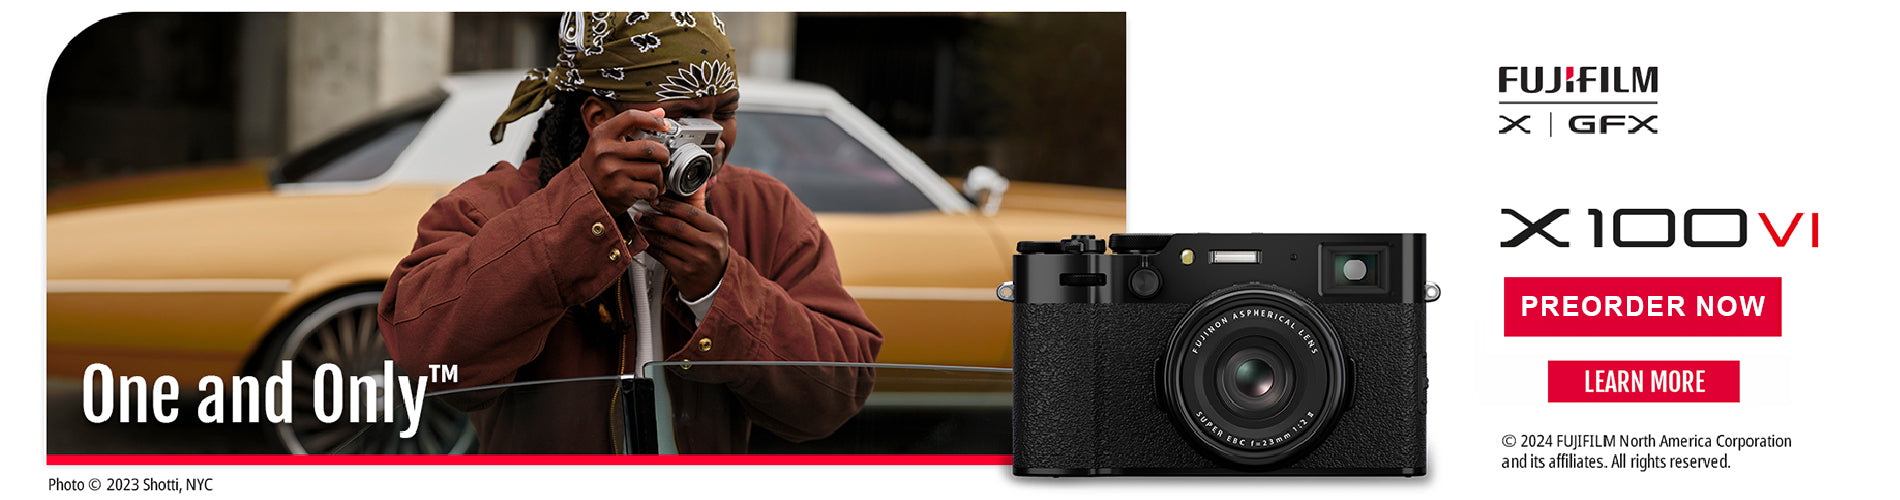 Canon EOS 90D DSLR Camera w/ Canon 18-55mm STM Lens Kit + Pro Photo & Video  Accessories including 128GB Memory, Speedlight TTL Flash, LED Light,  Condenser Micorphone, 60 Tripod & More 